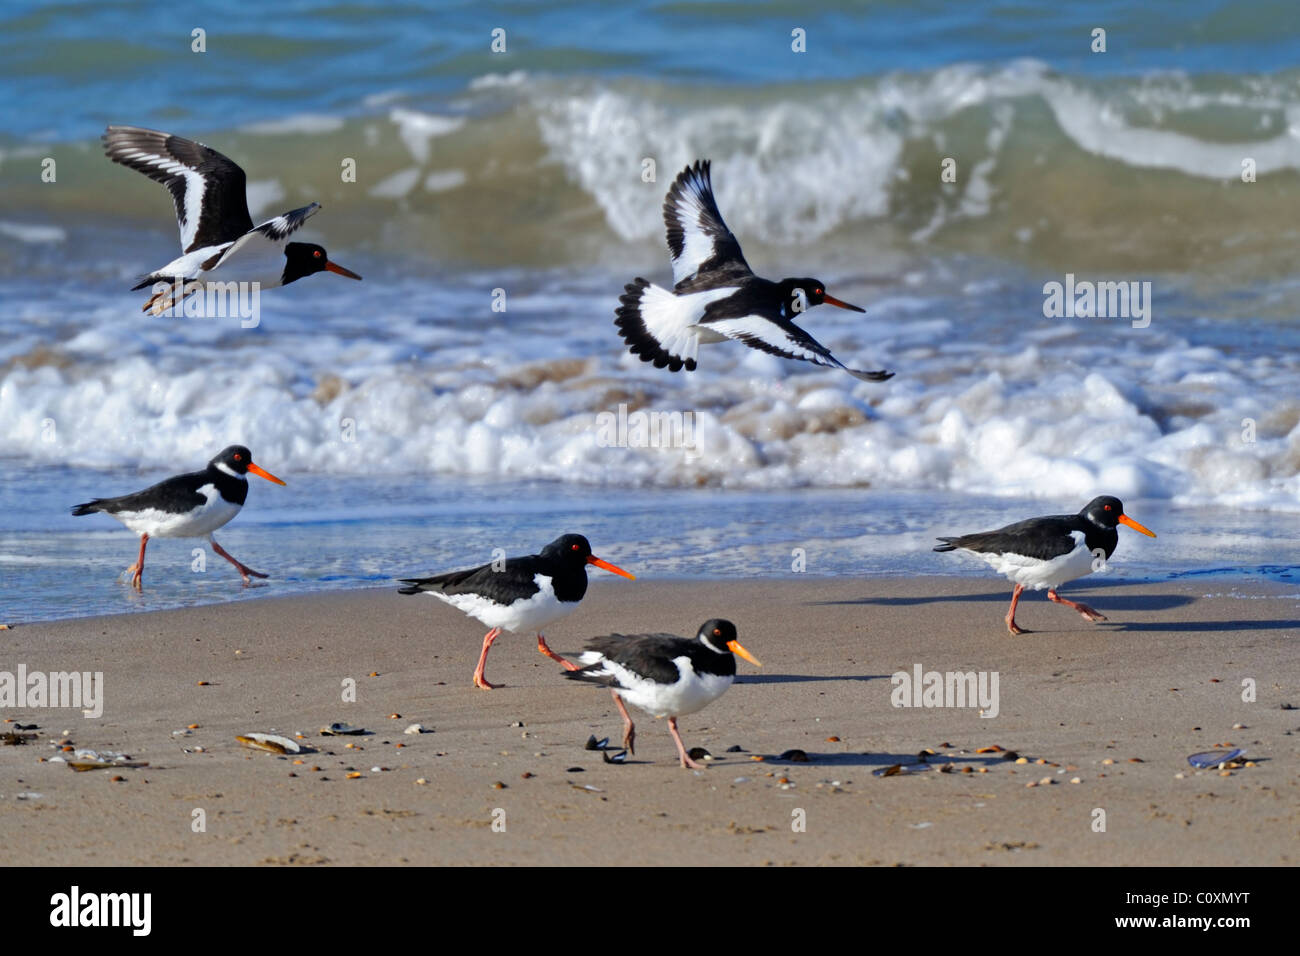 Six Oystercatchers (Haematopus ostralegus) on the beach Stock Photo